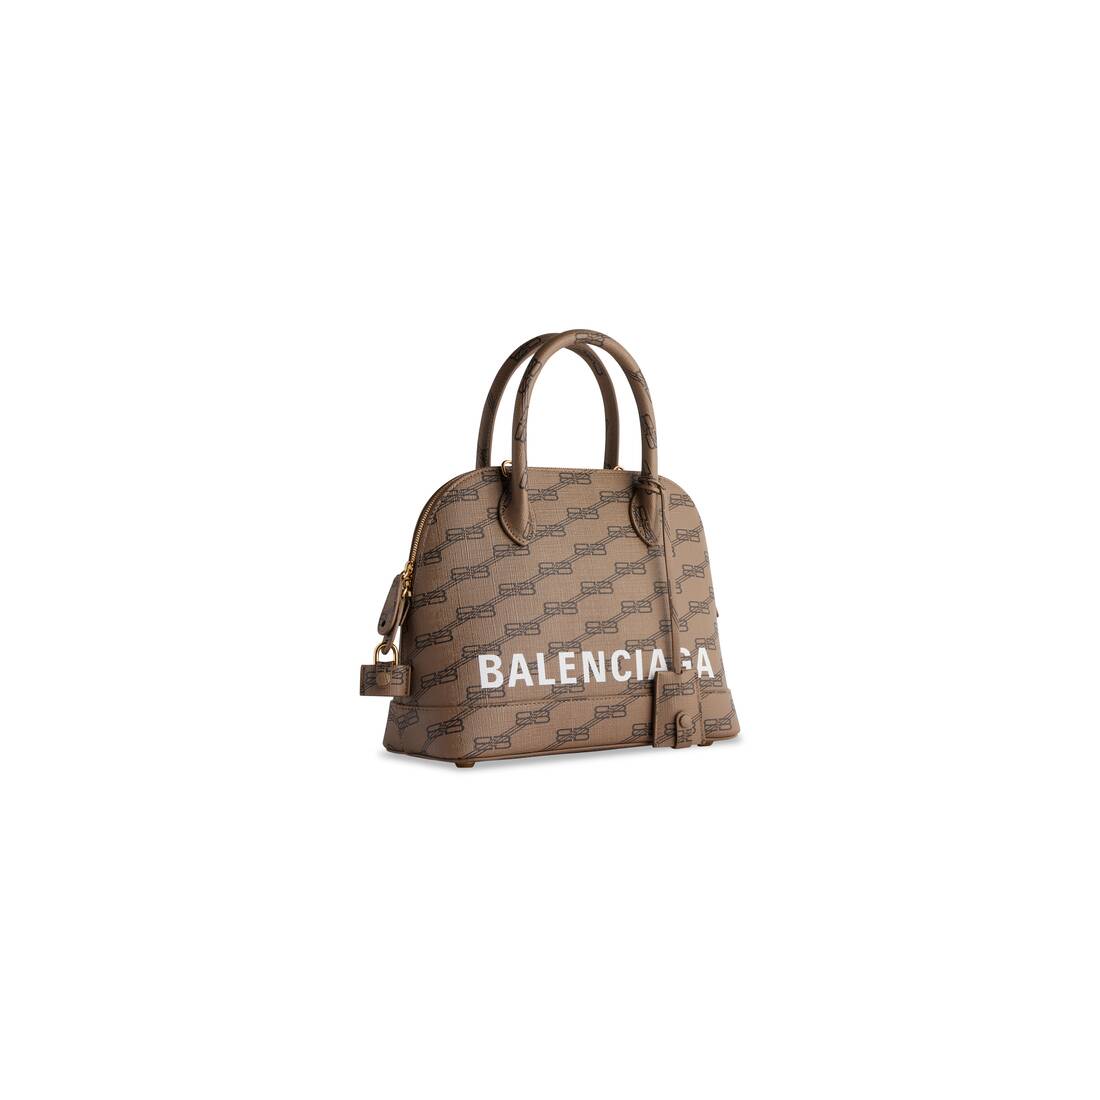 $2150 BALENCIAGA black Ville handbag w/strap sz small - current